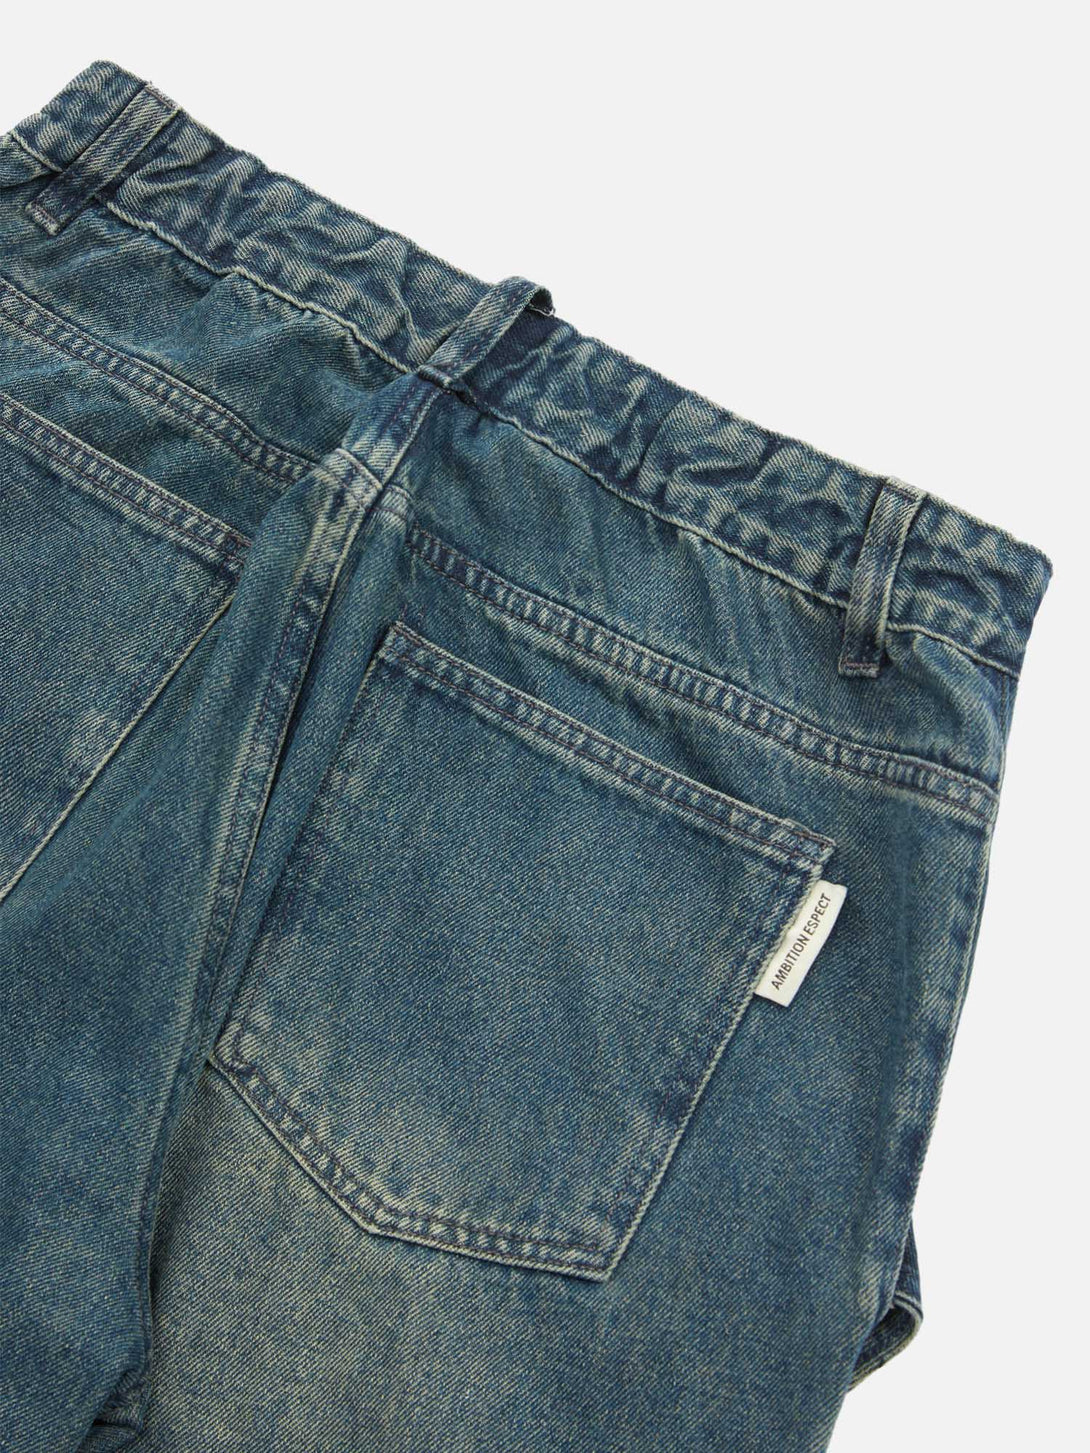 Majesda® - High Street Heavy Duty Design Multi-pocket Jeans- Outfit Ideas - Streetwear Fashion - majesda.com